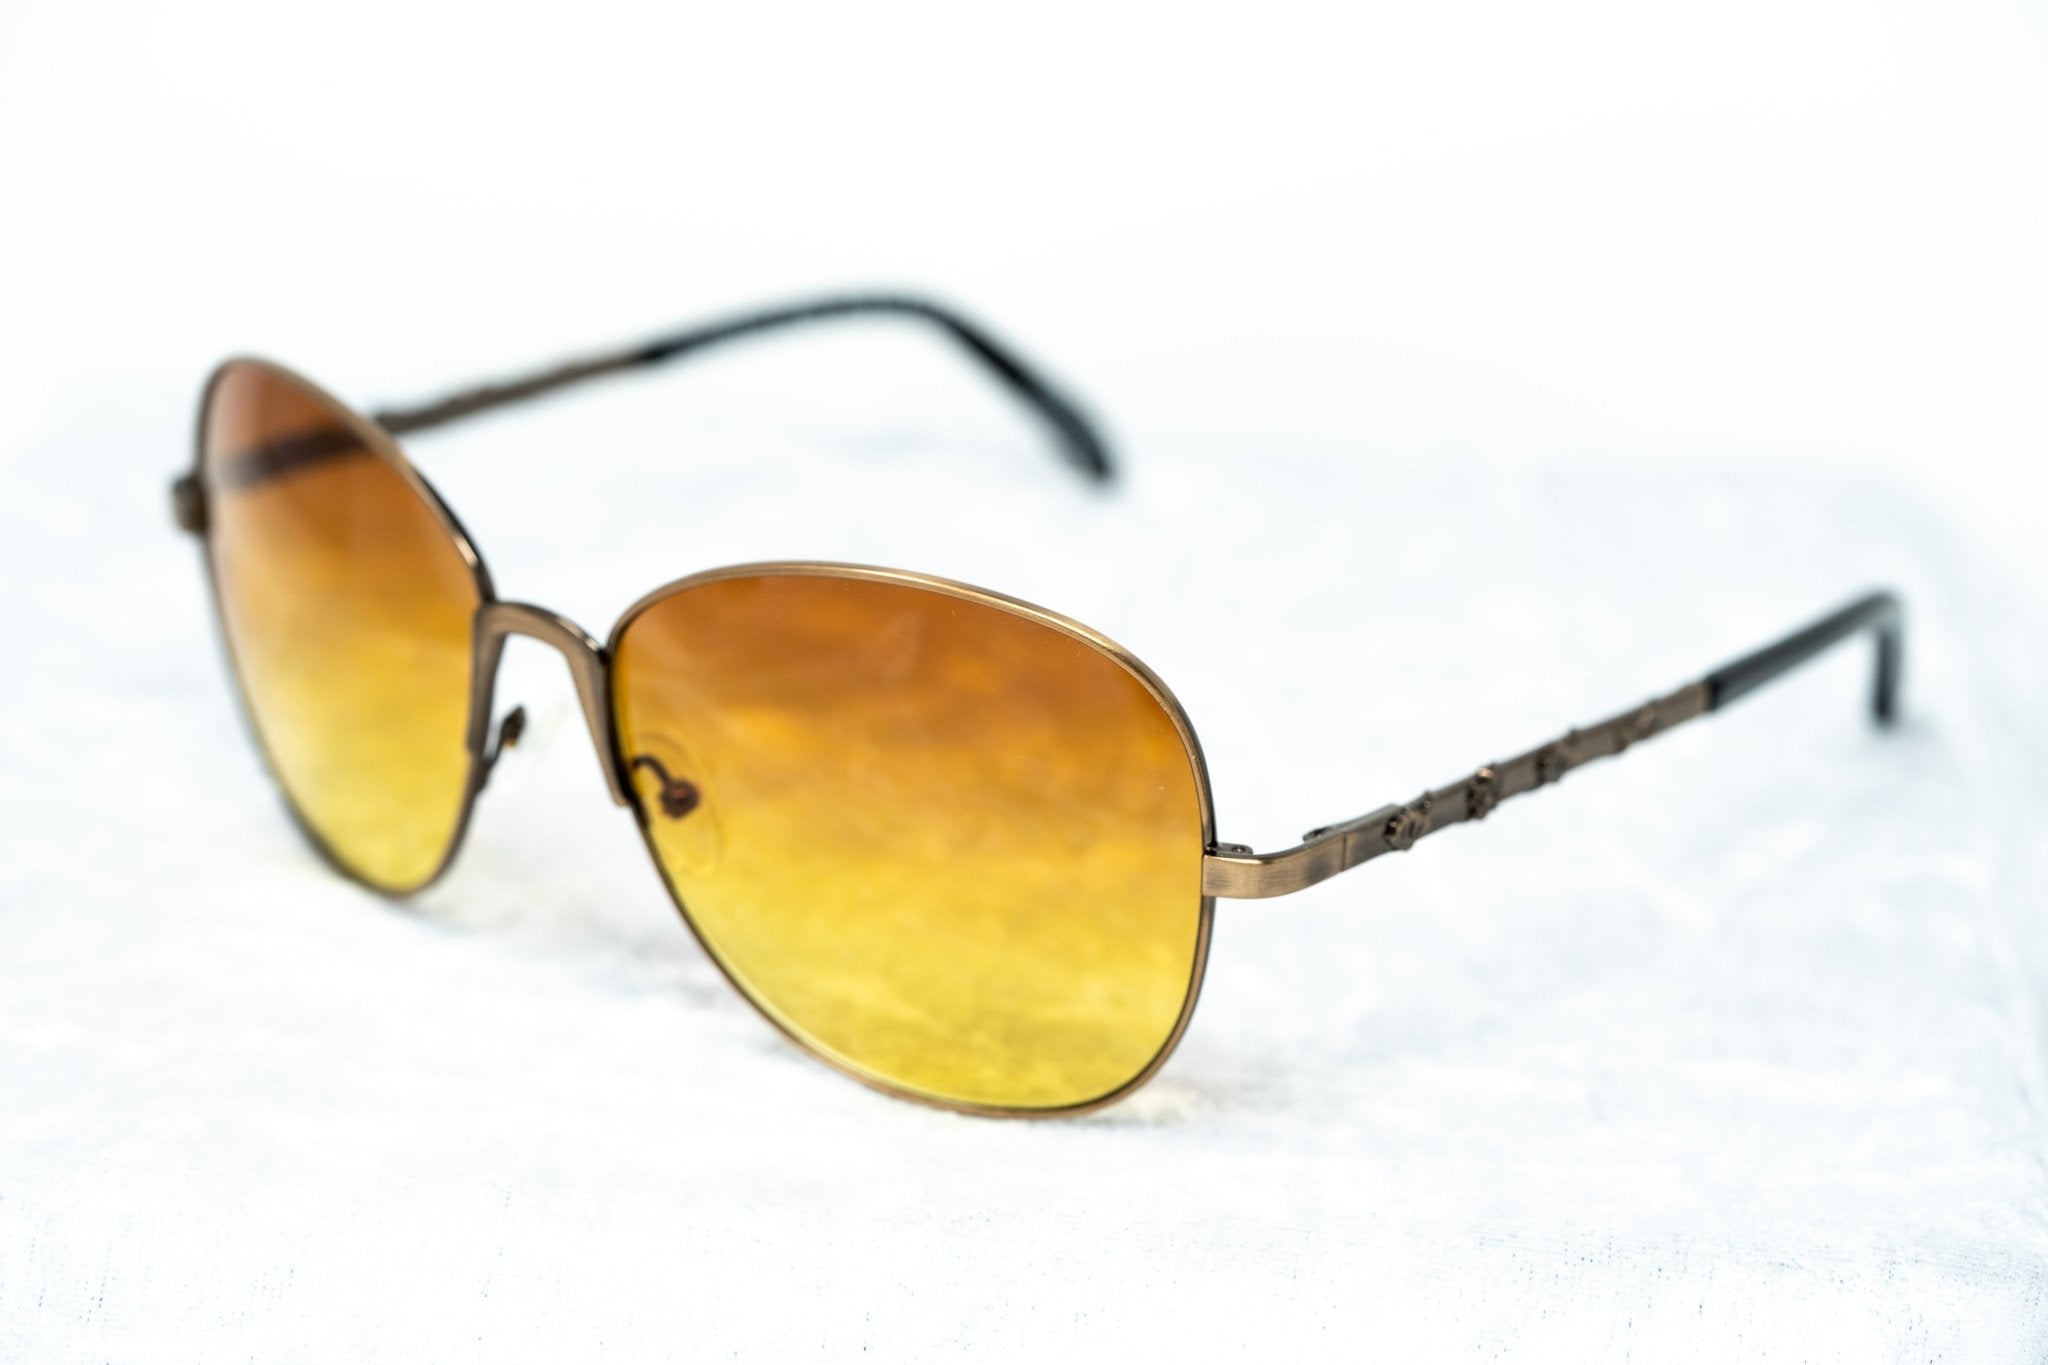 Buddhist Punk Sunglasses Rectangular Gold With Orange Yellow Graduated Lenses 6BP3C1GOLD - Watches & Crystals